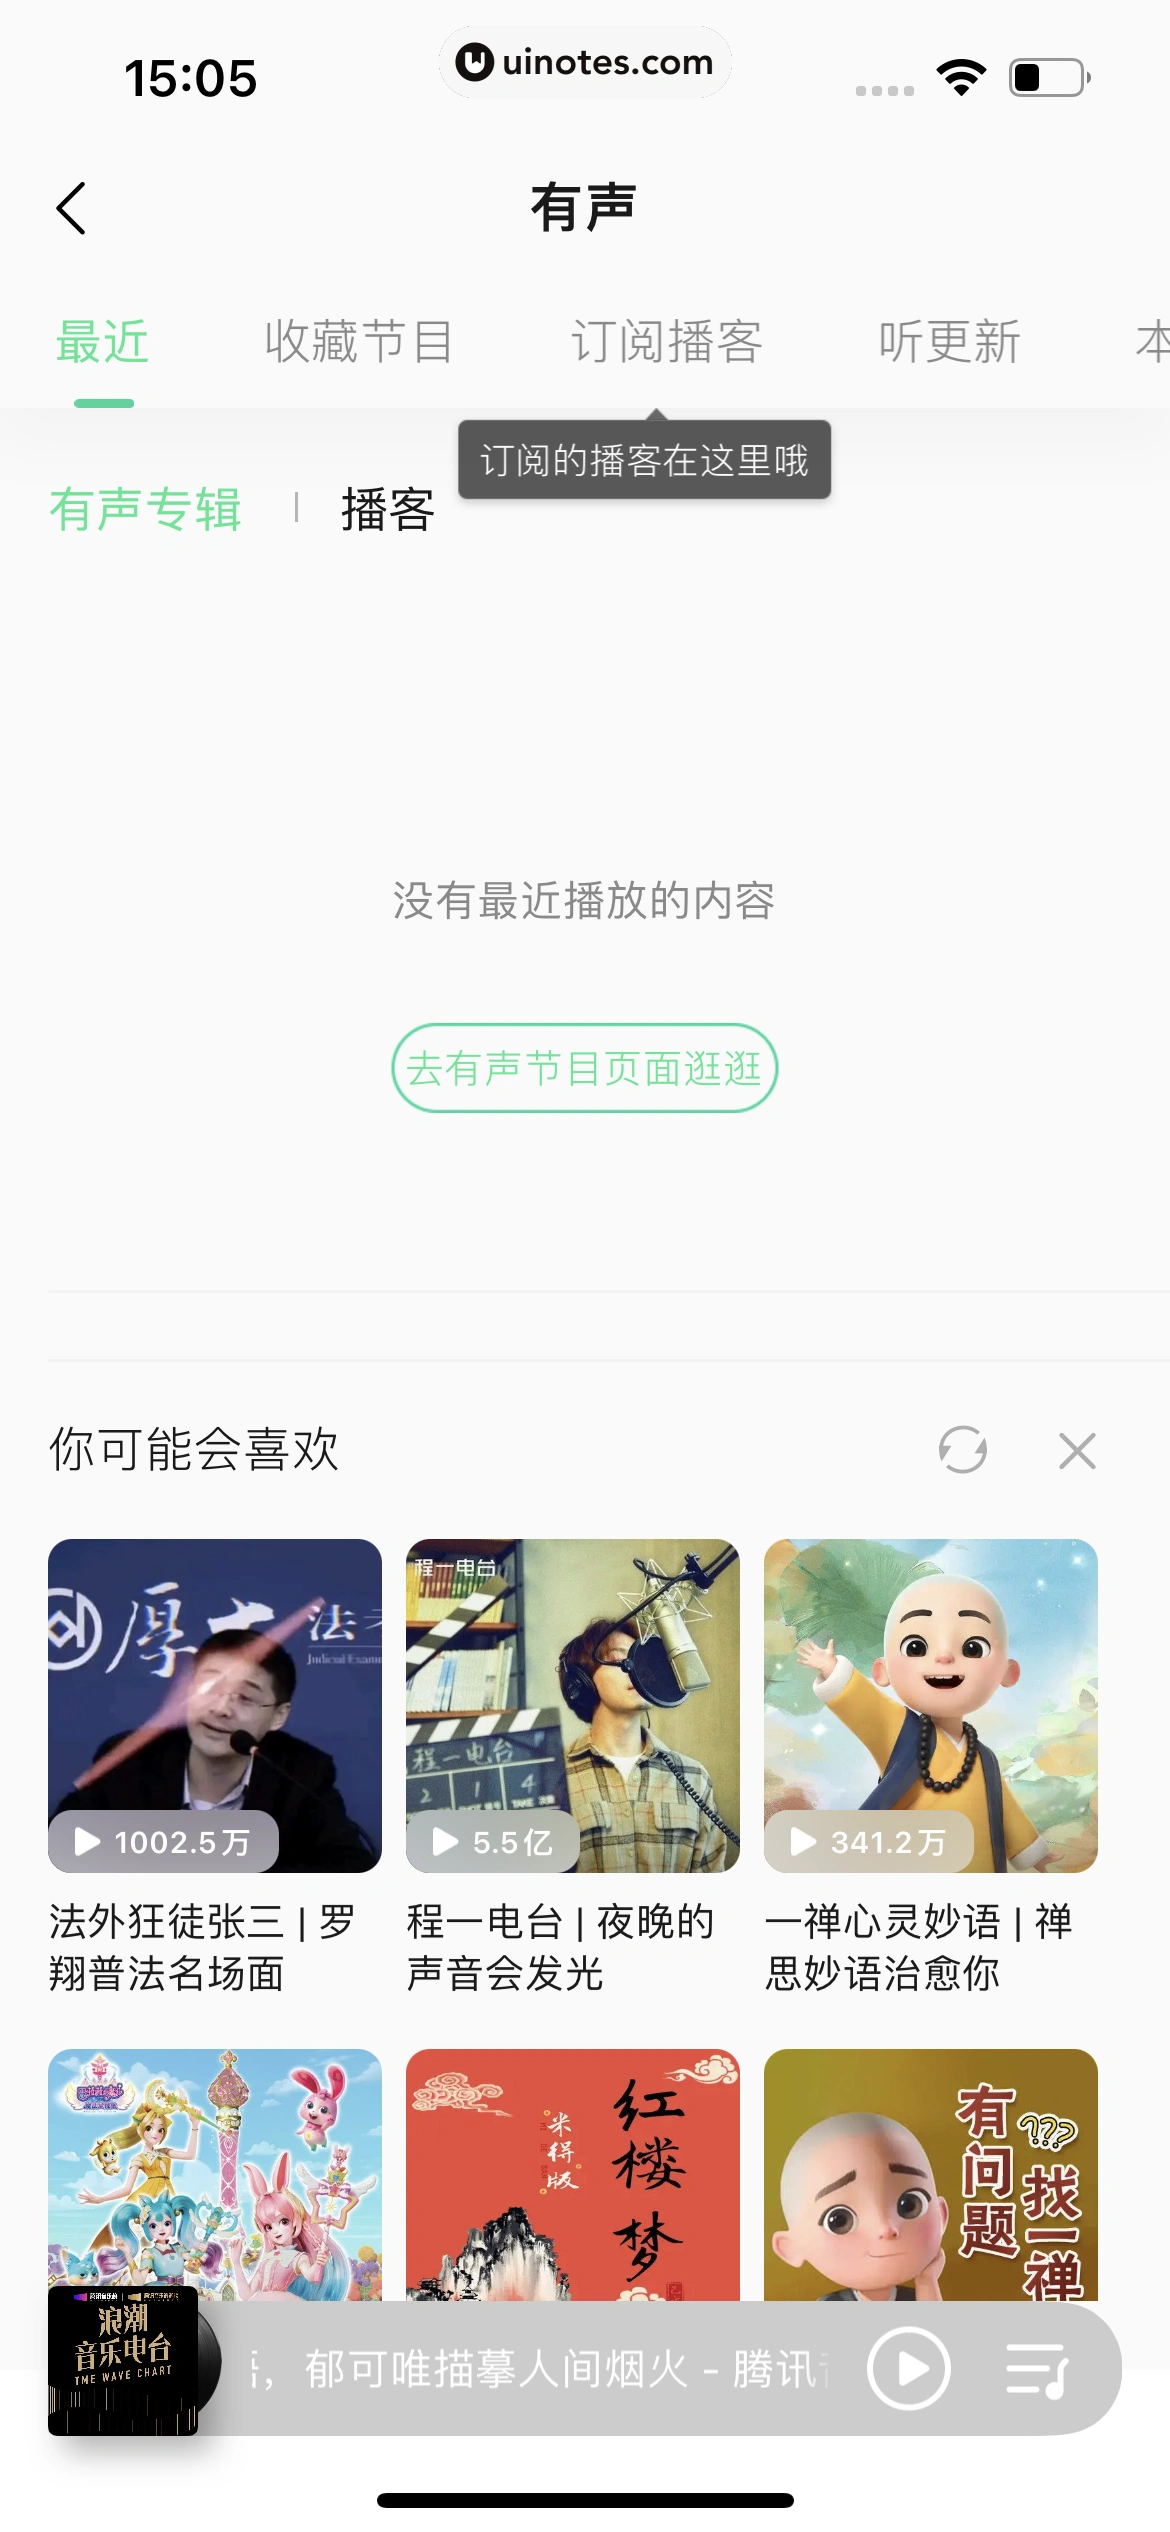 QQ音乐 App 截图 309 - UI Notes